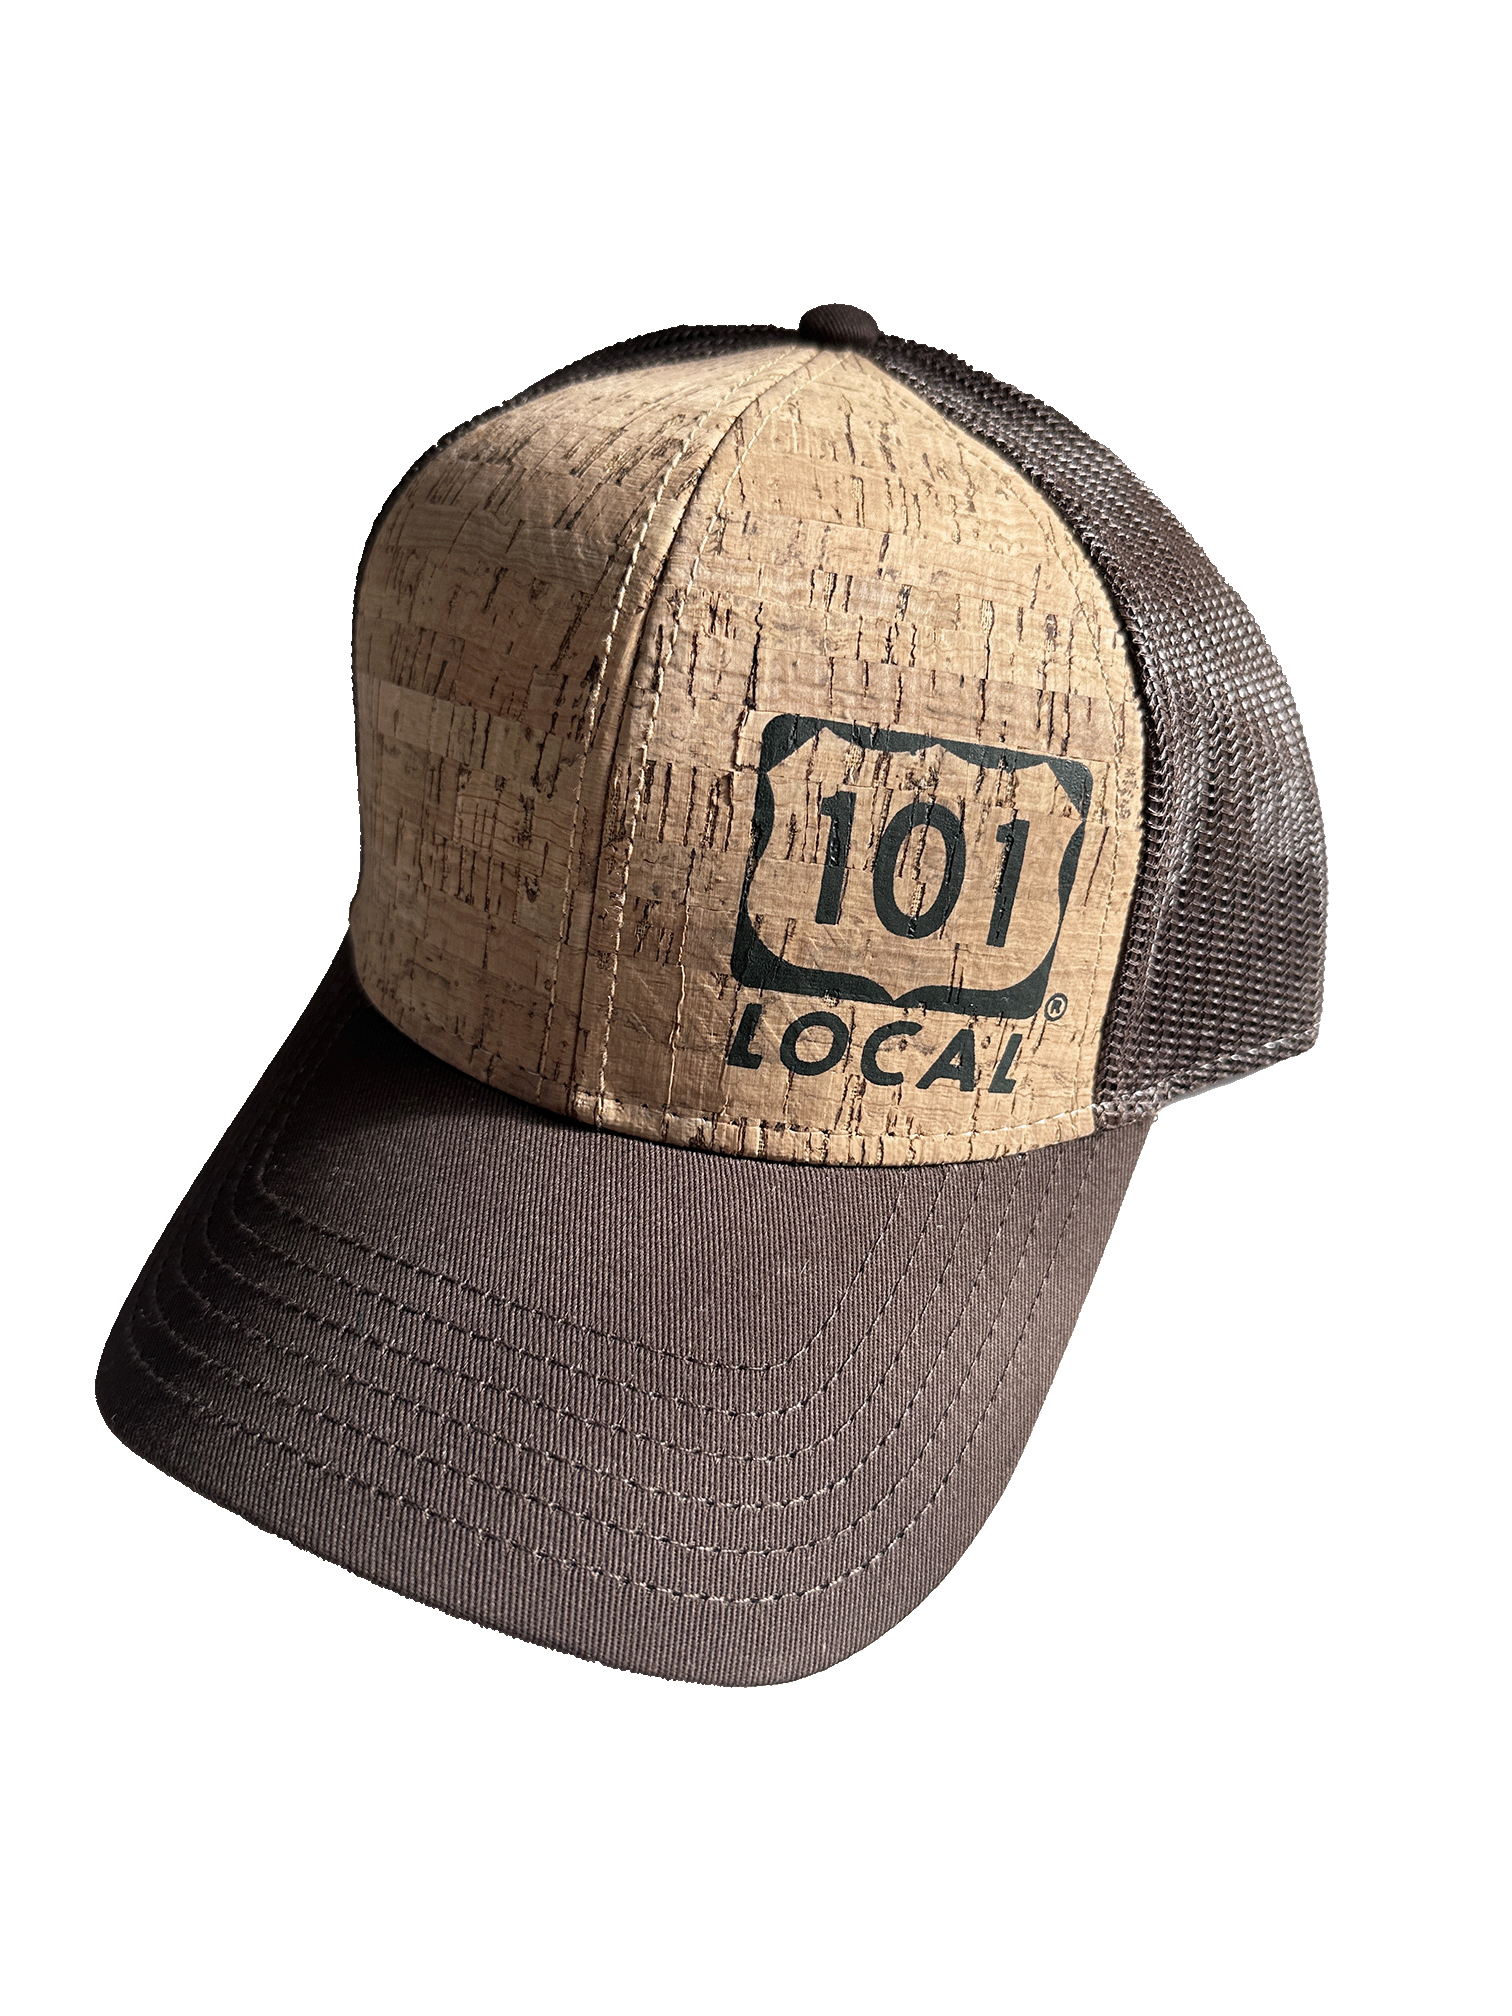 Premium Reflective 101 Local Cork SnapBack Hat